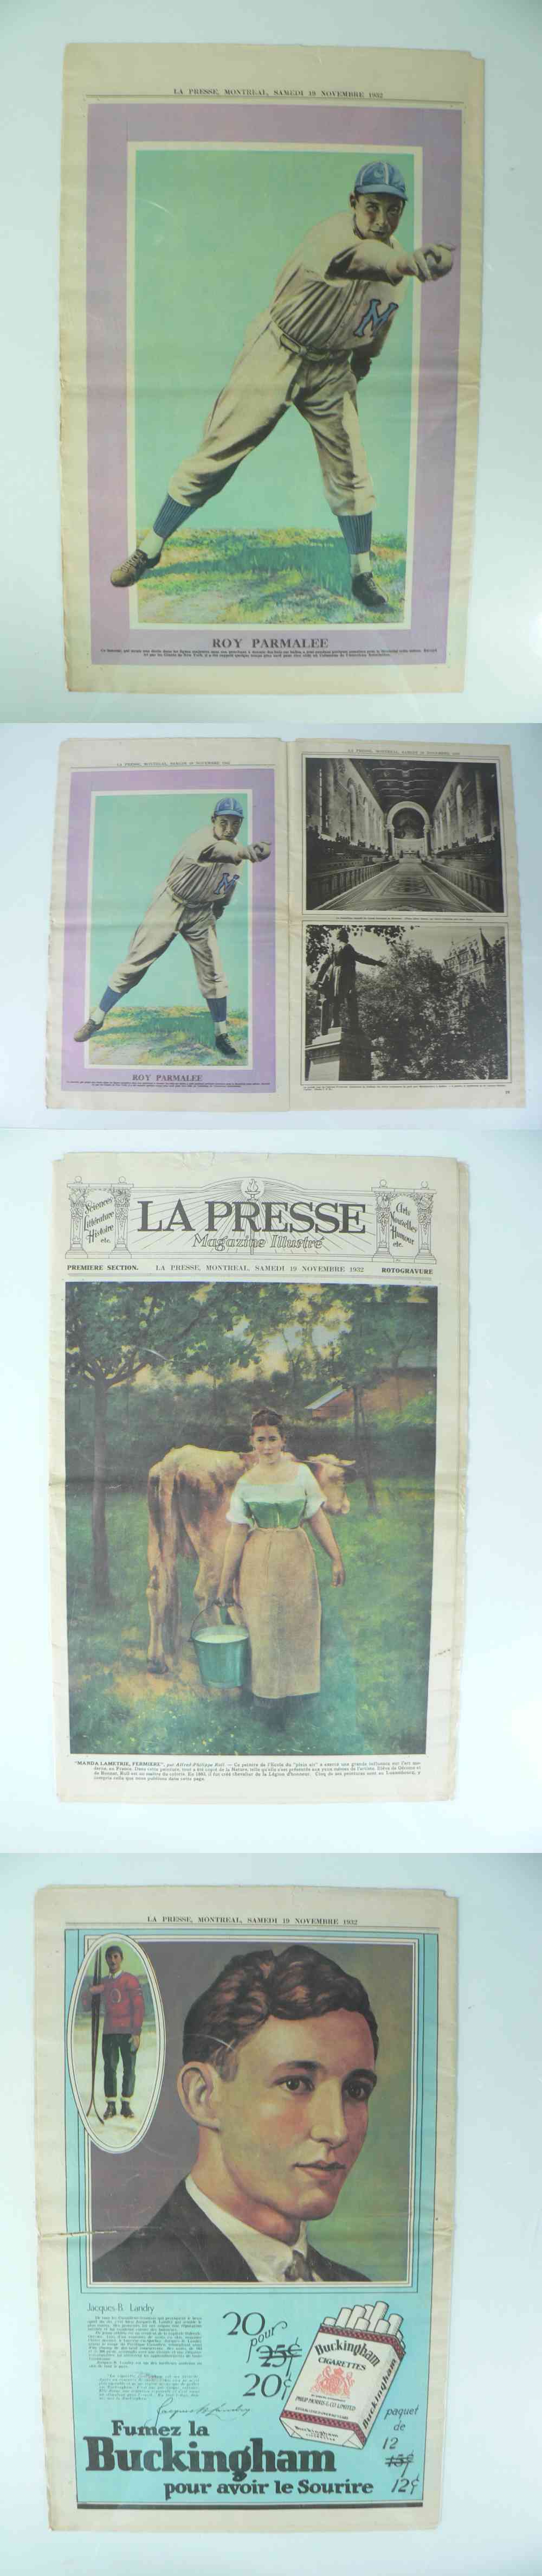 1932 LA PRESSE FULL NEWSPAPER INSIDE PHOTO R. PARMALEE photo